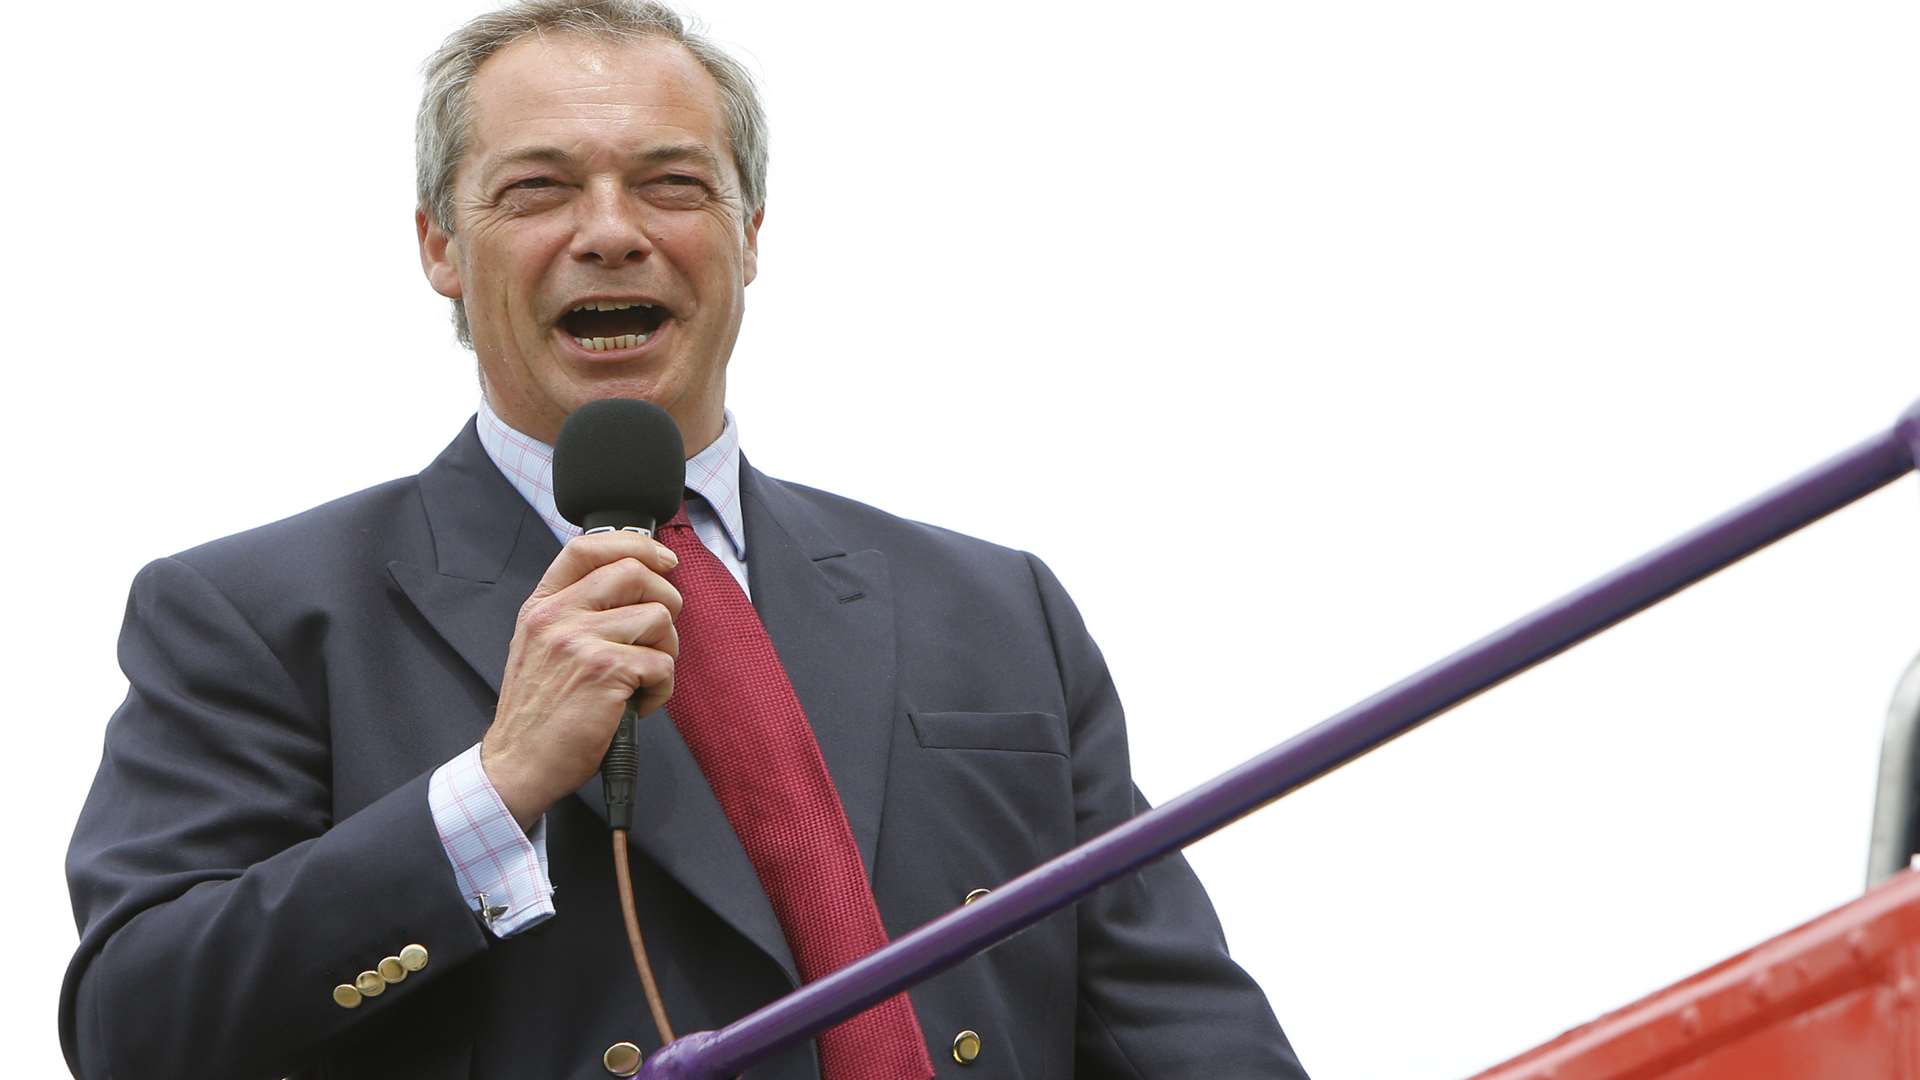 Ex-Ukip leader Nigel Farage visiting Ramsgate on his battle bus